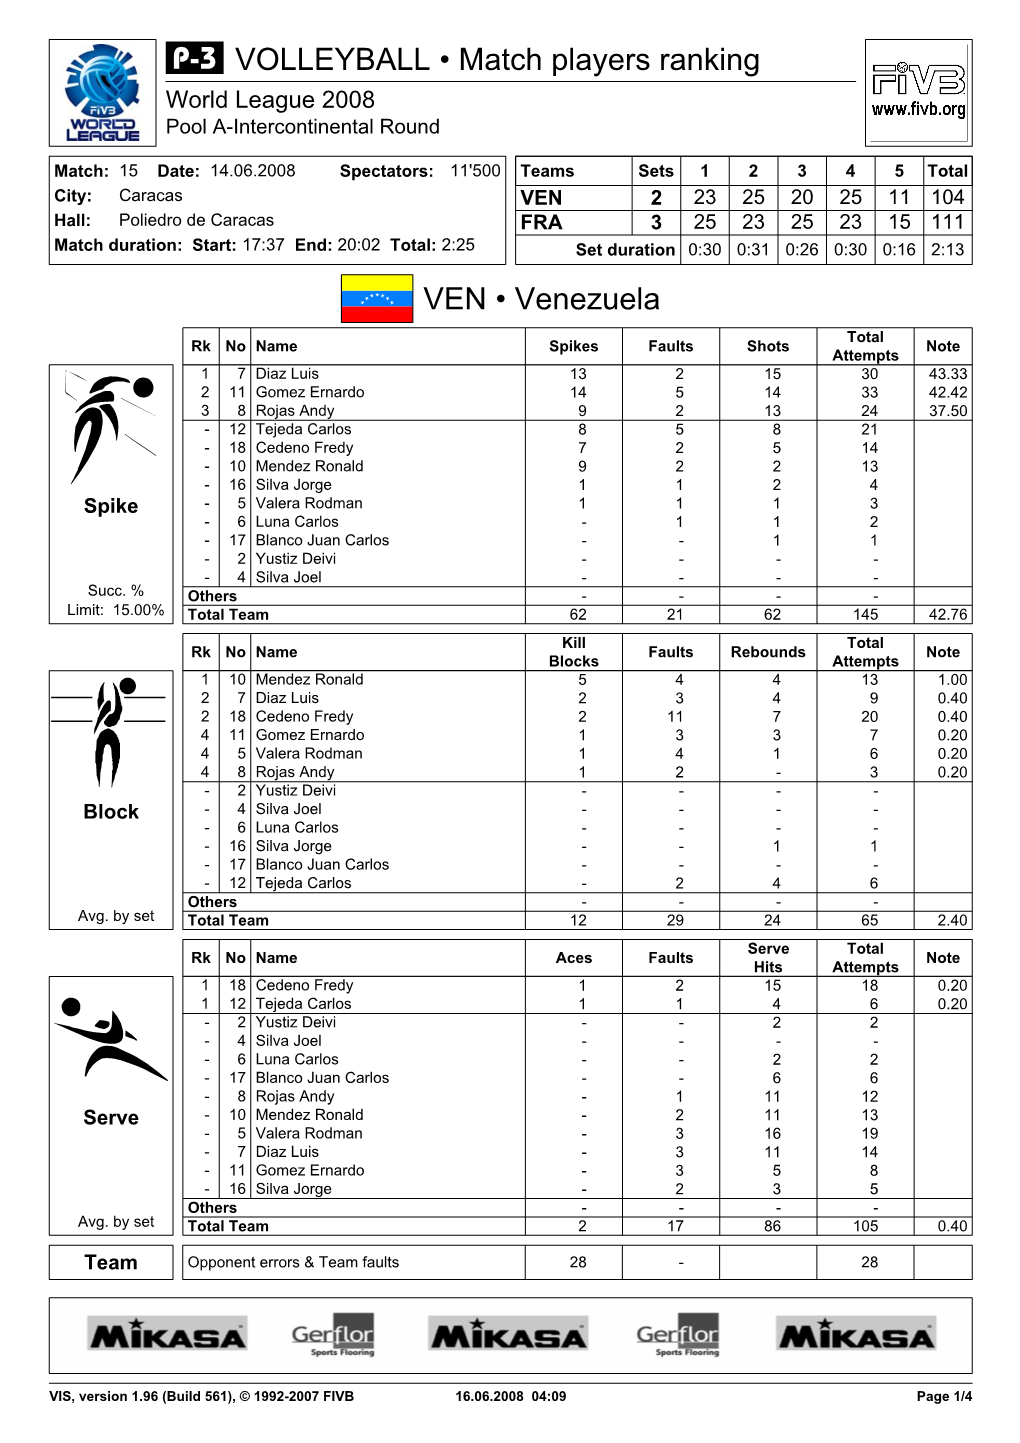 VEN • Venezuela VOLLEYBALL • Match Players Ranking